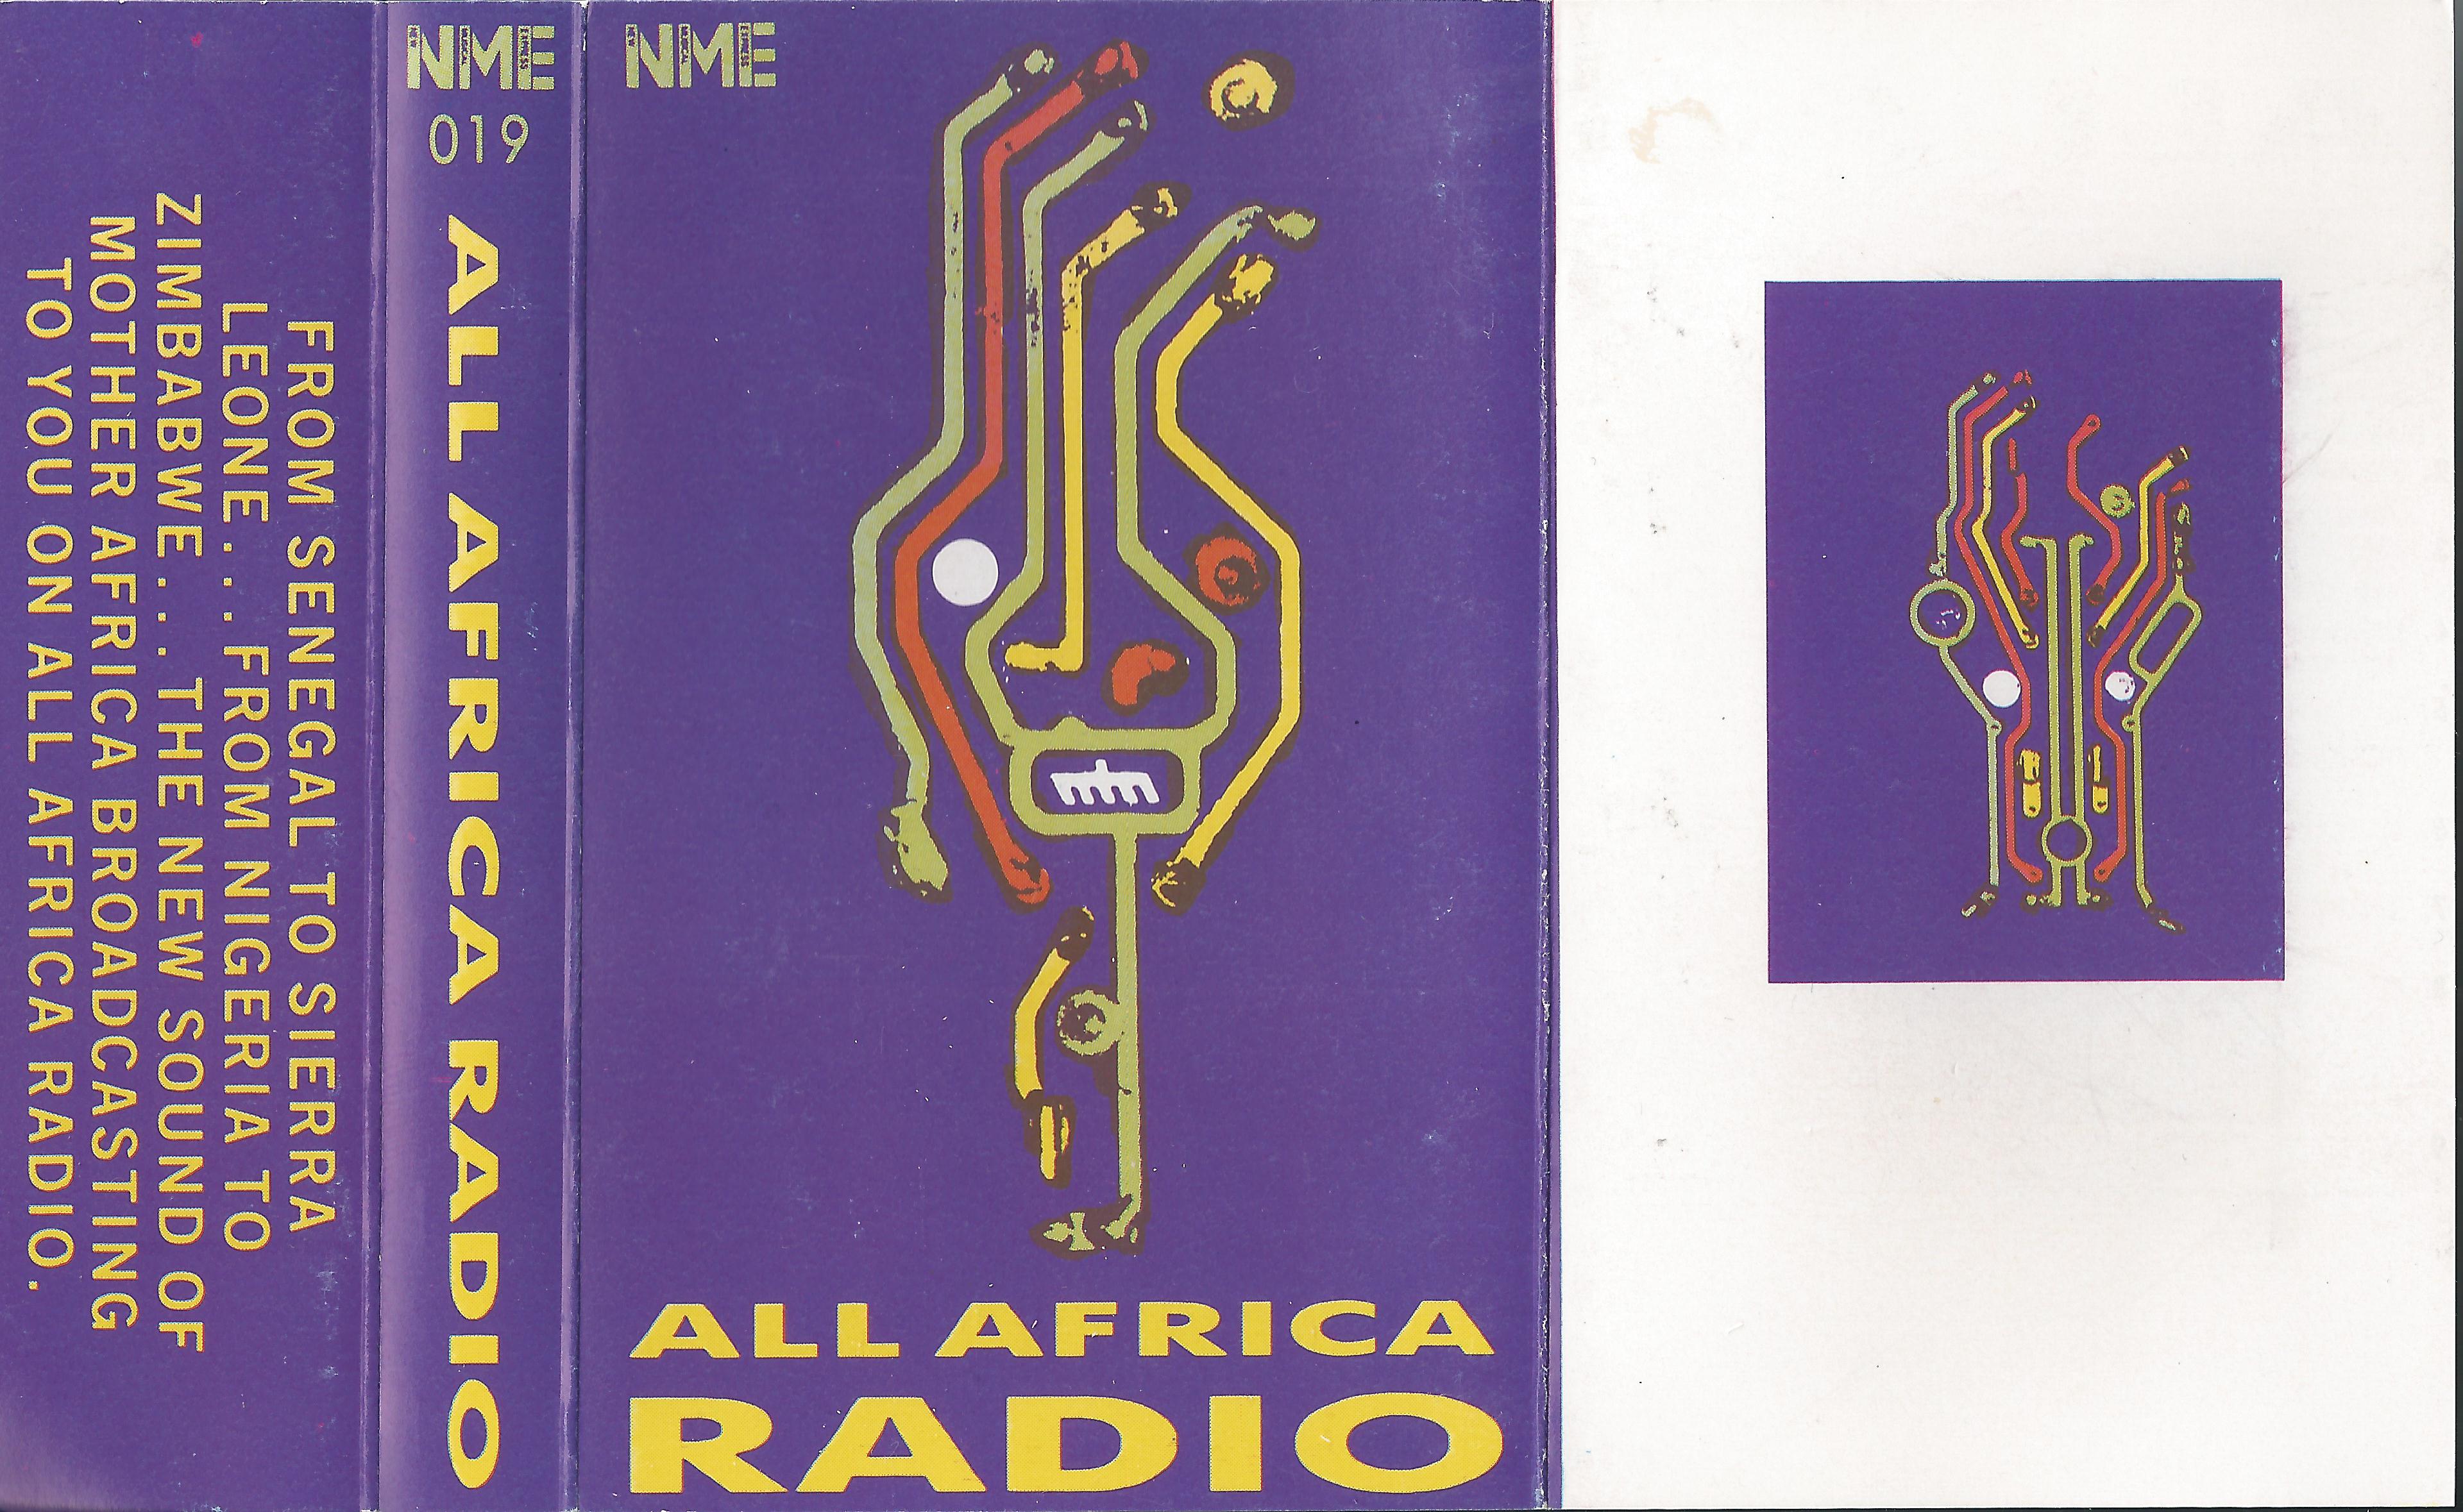 019-all-africa-radio-front.jpg